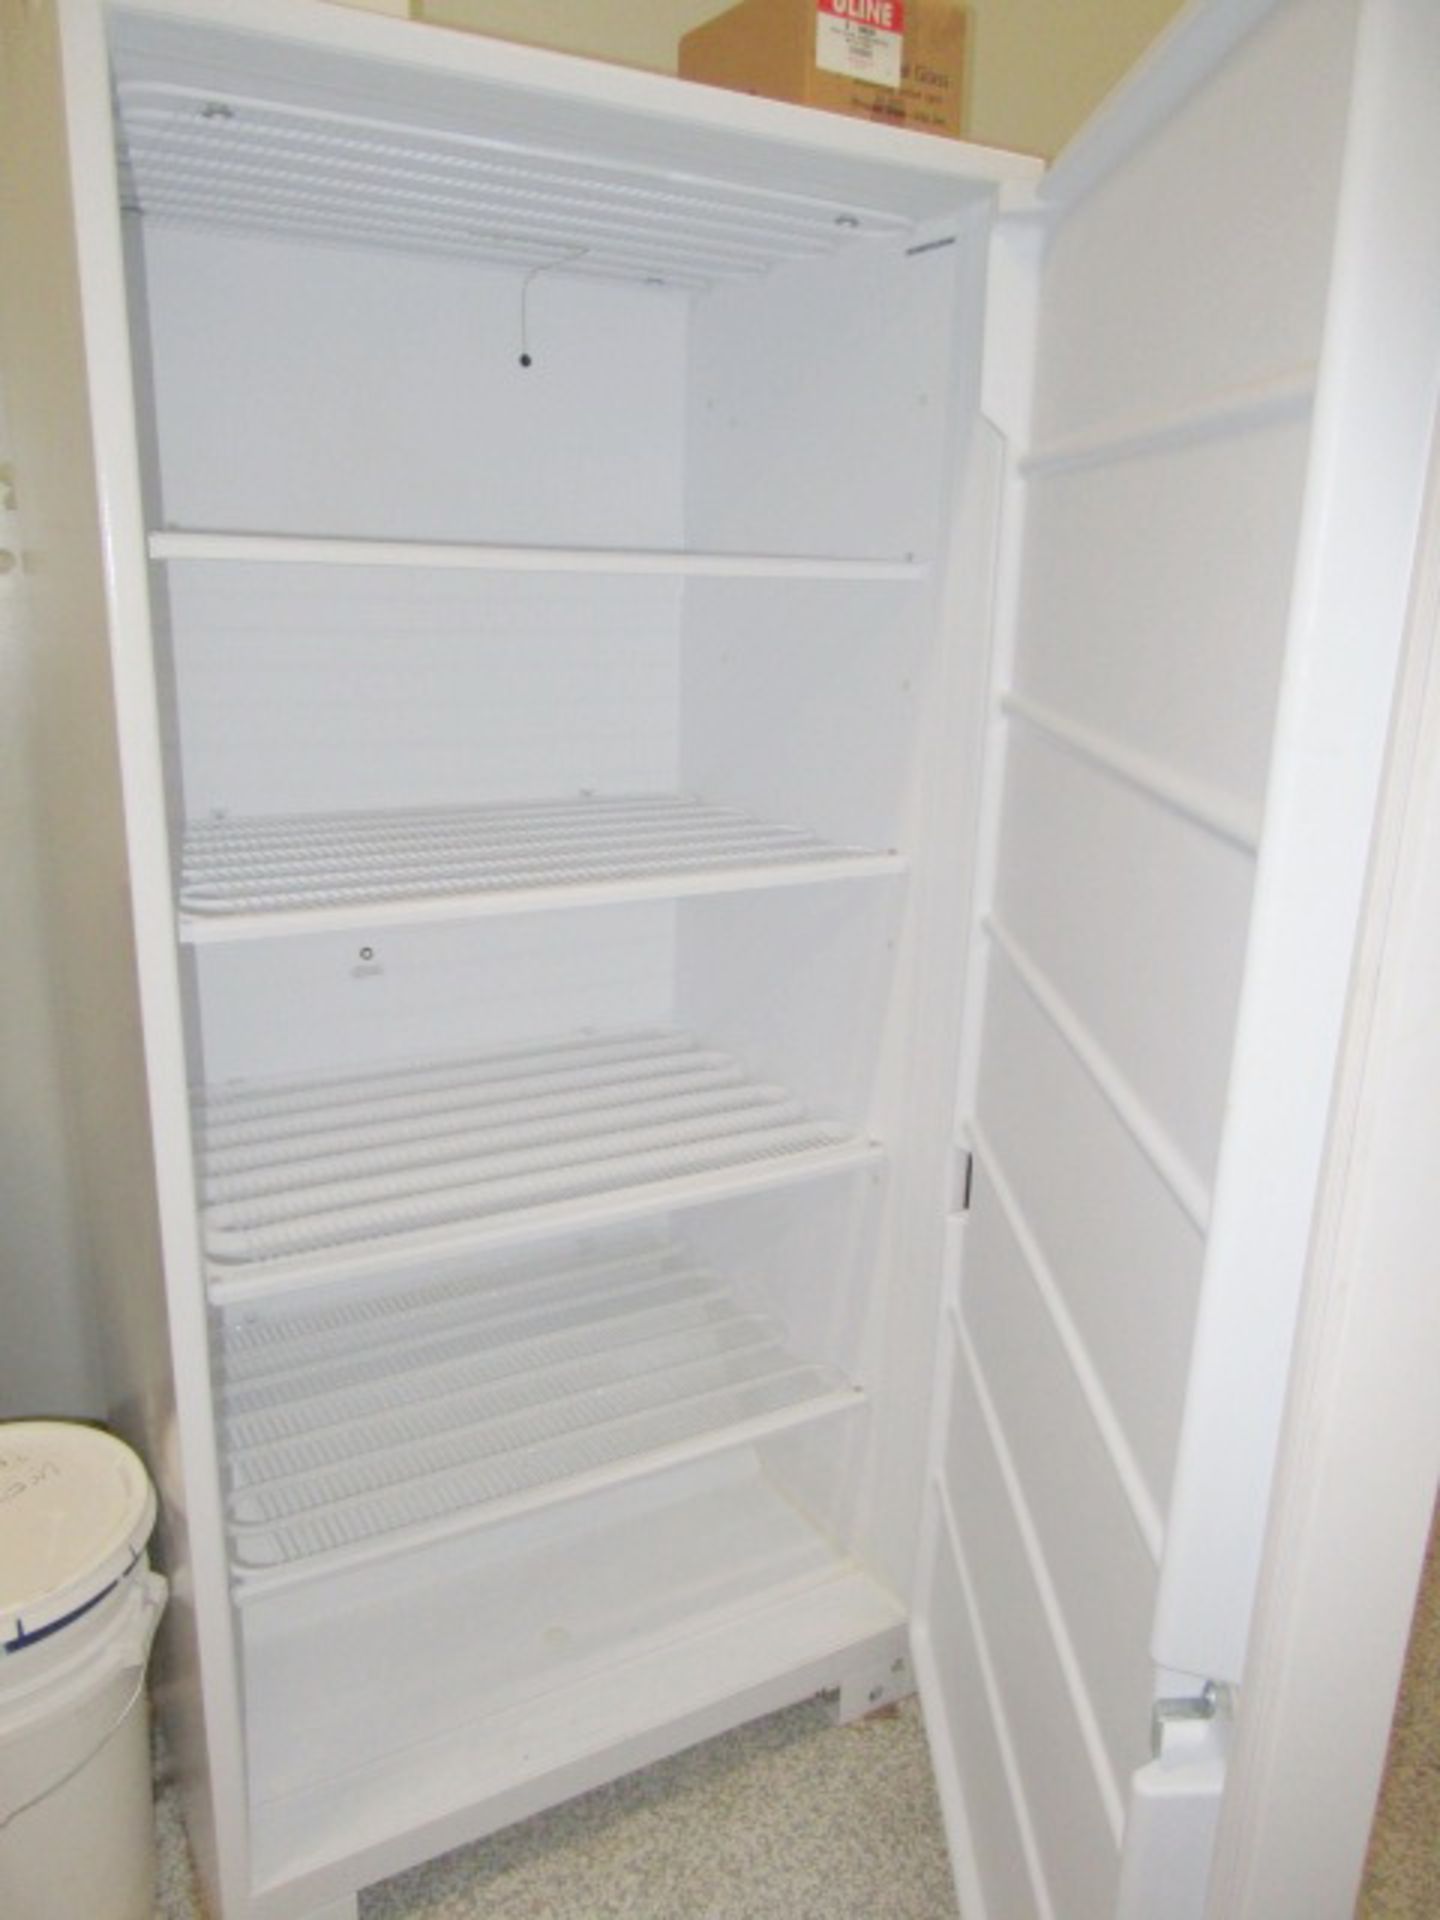 SO-LOW Freezer - Image 3 of 3